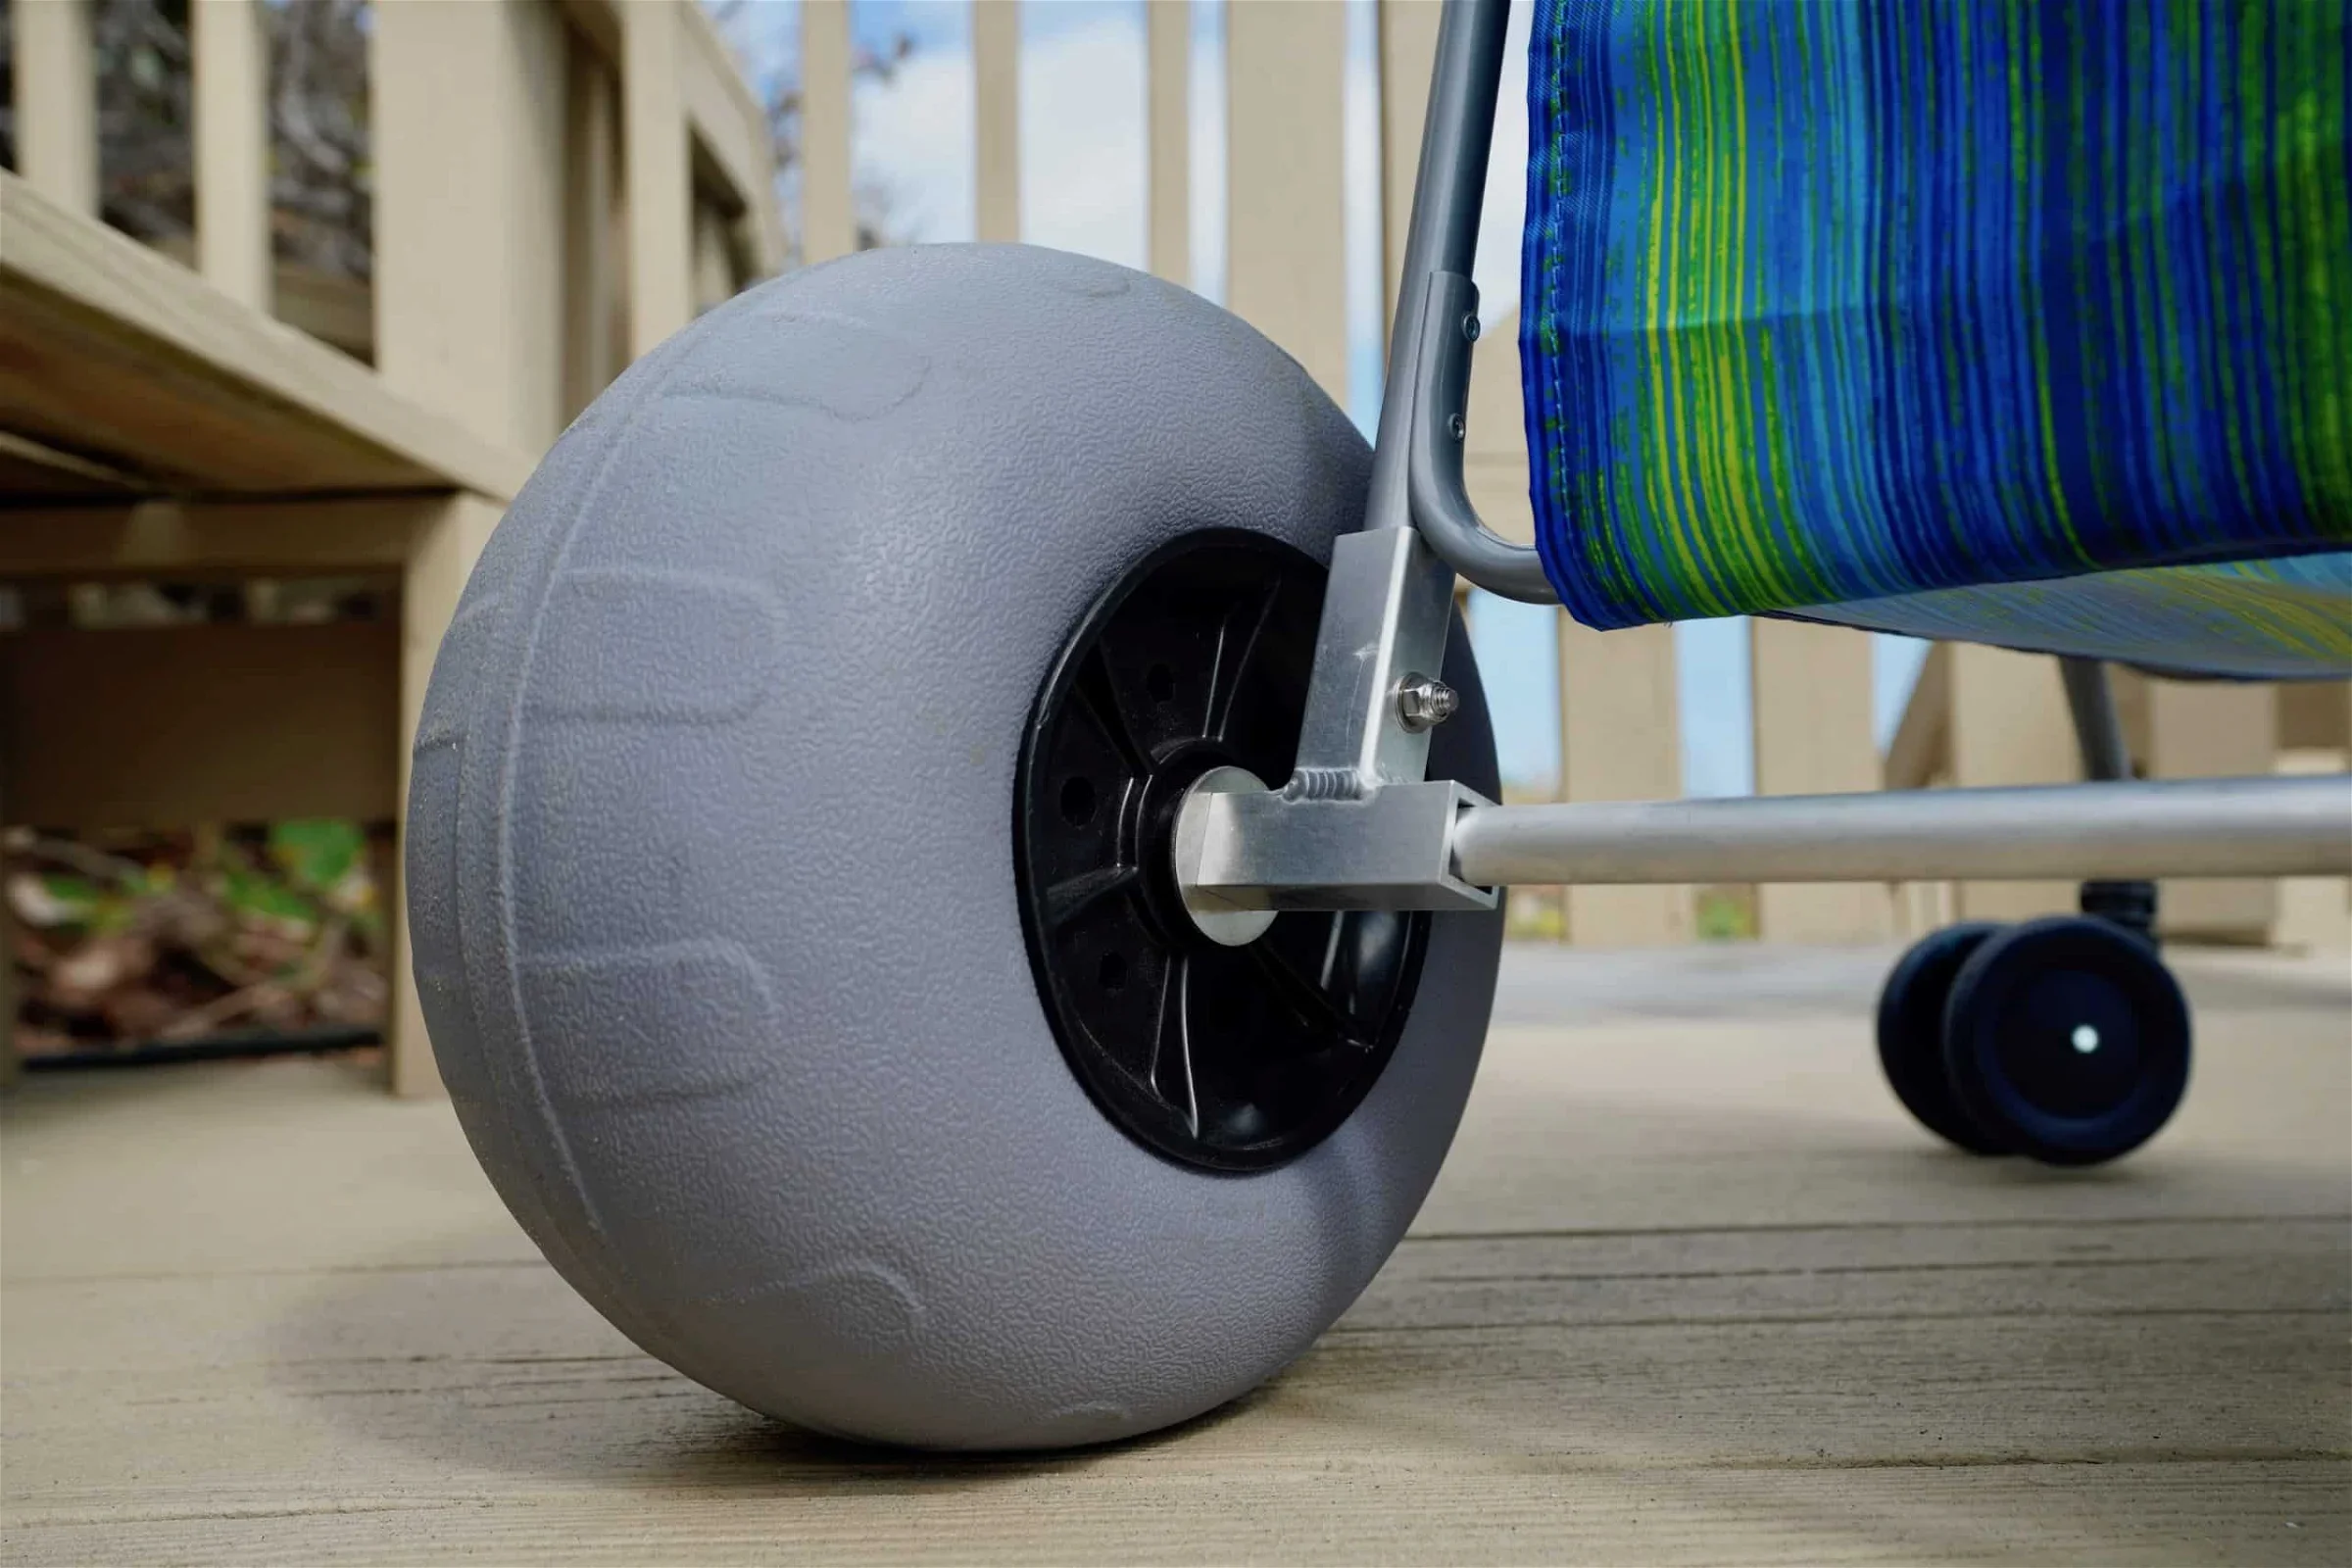 A close up view of a beach balloon tire on a cart.